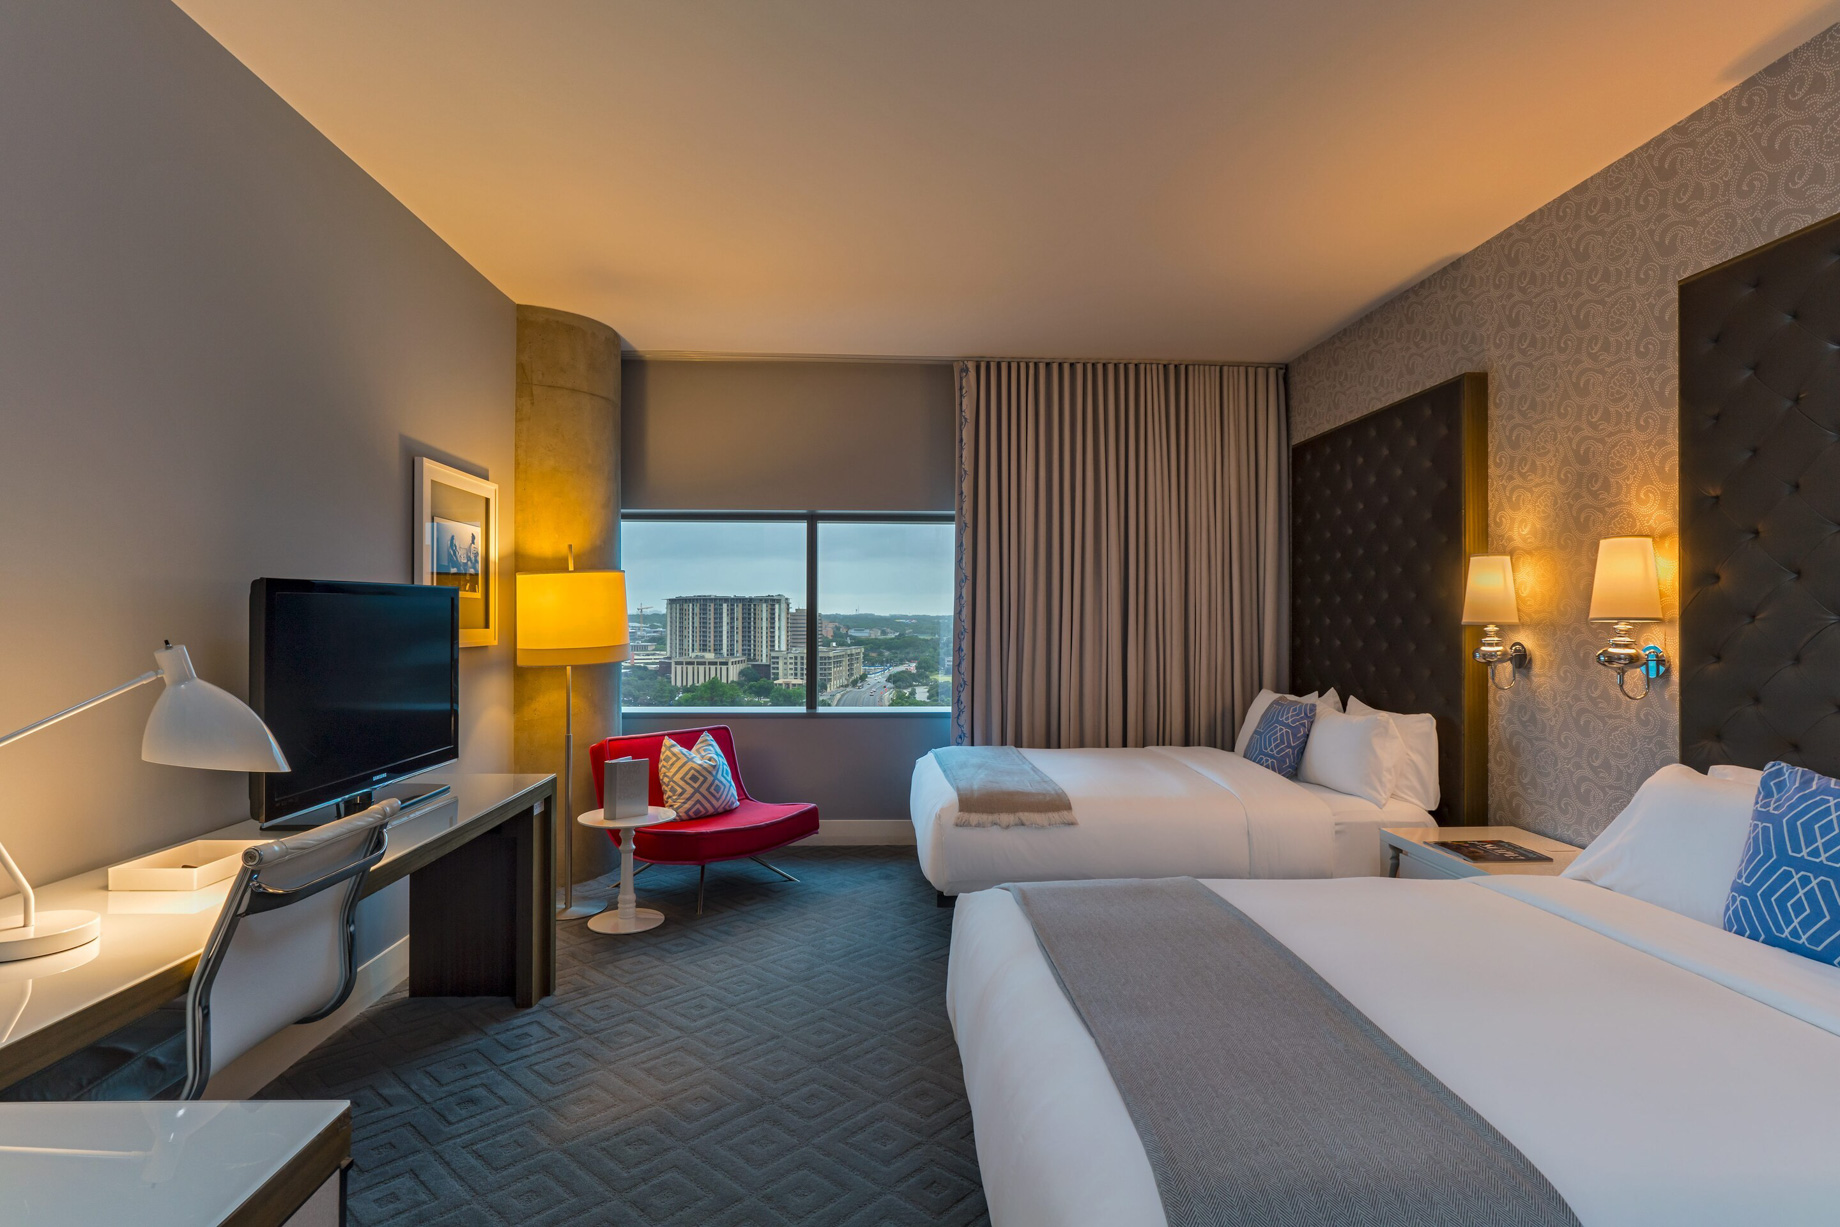 W Austin Hotel - Austin, TX, USA - Spectacular Double